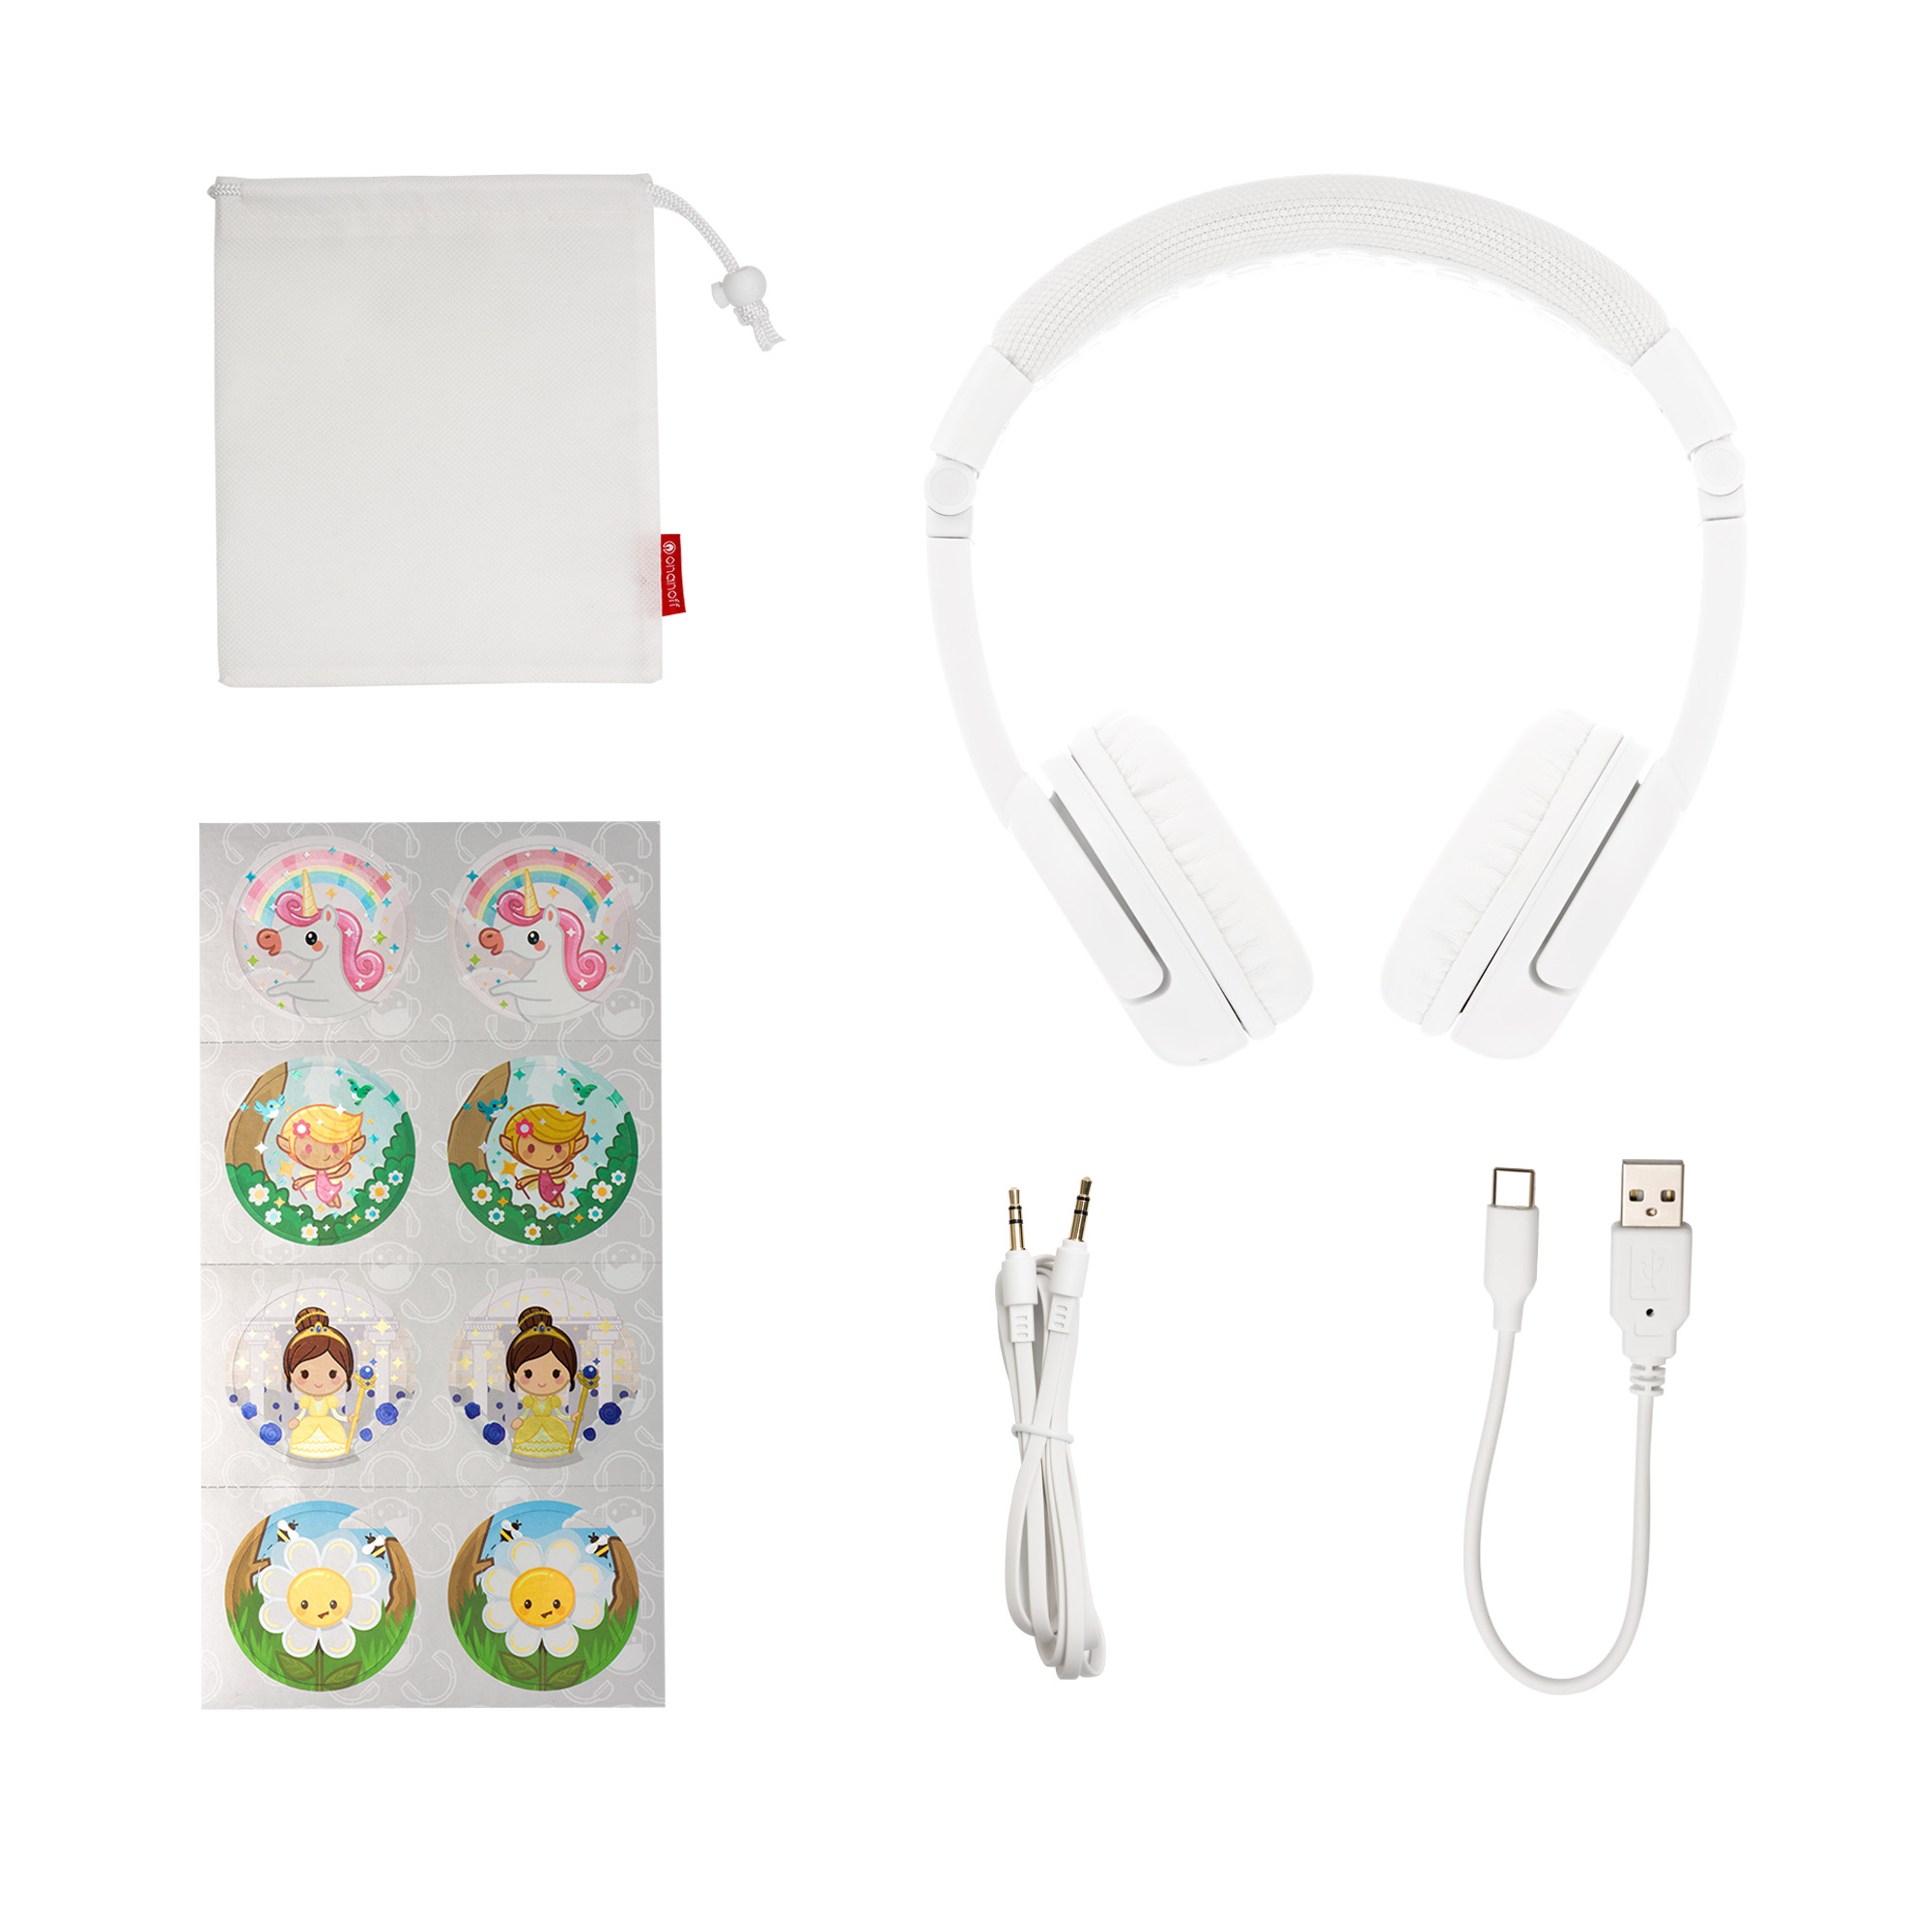 BUDDYPHONES Play+, On-ear Kinder Kopfhörer Weiß Bluetooth